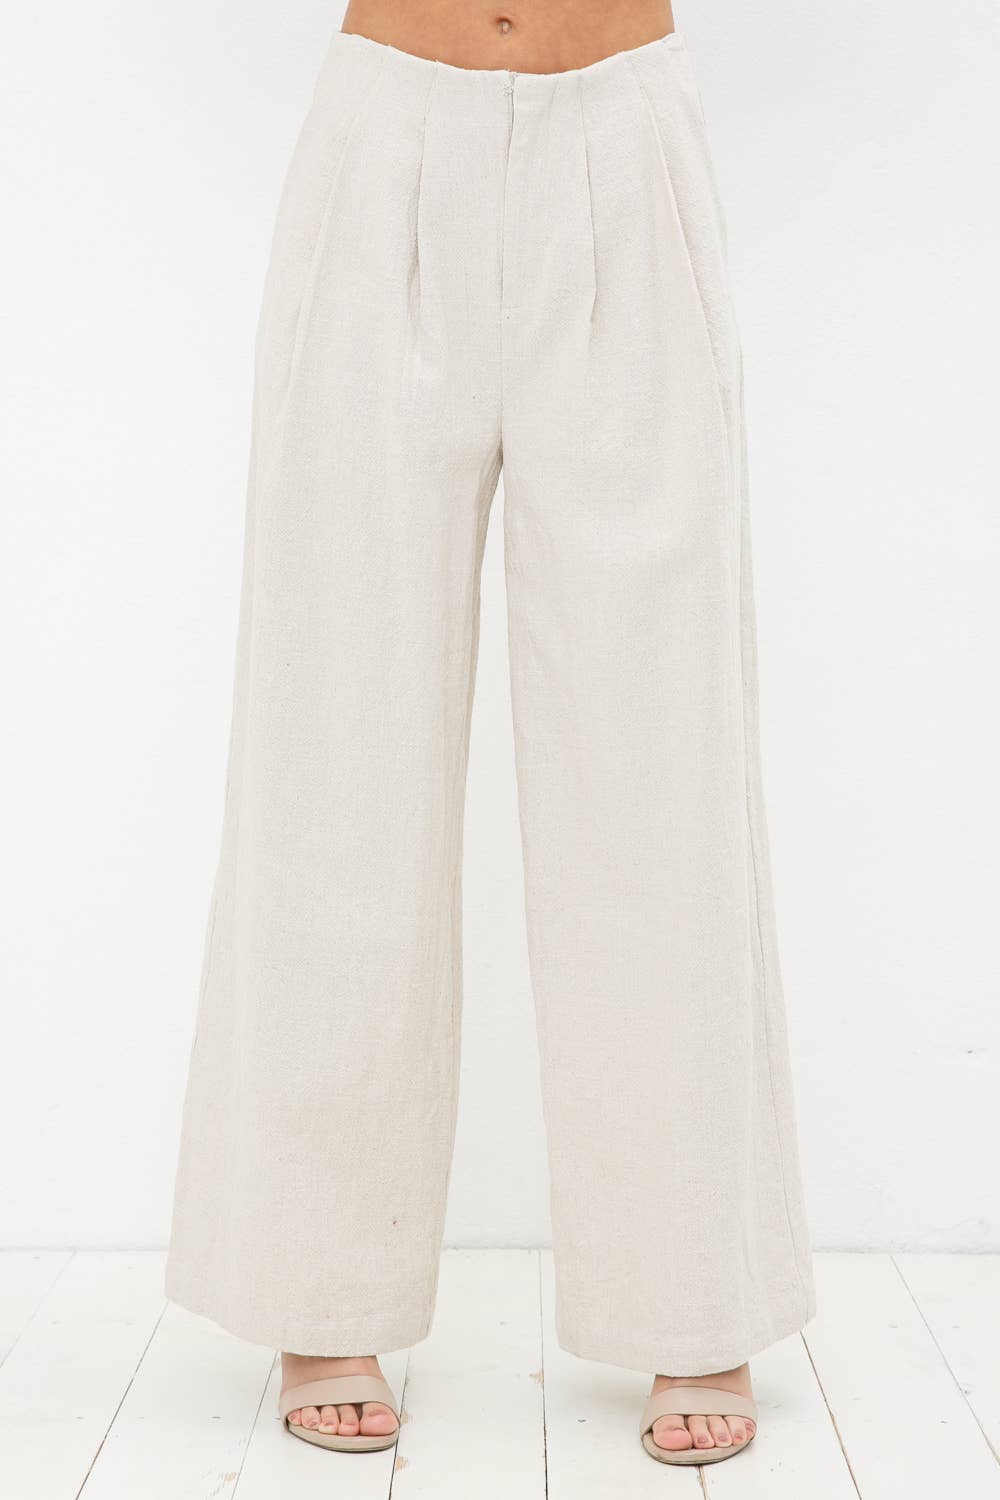 31476P - High Waisted Sturdy Linen Pleated Pants